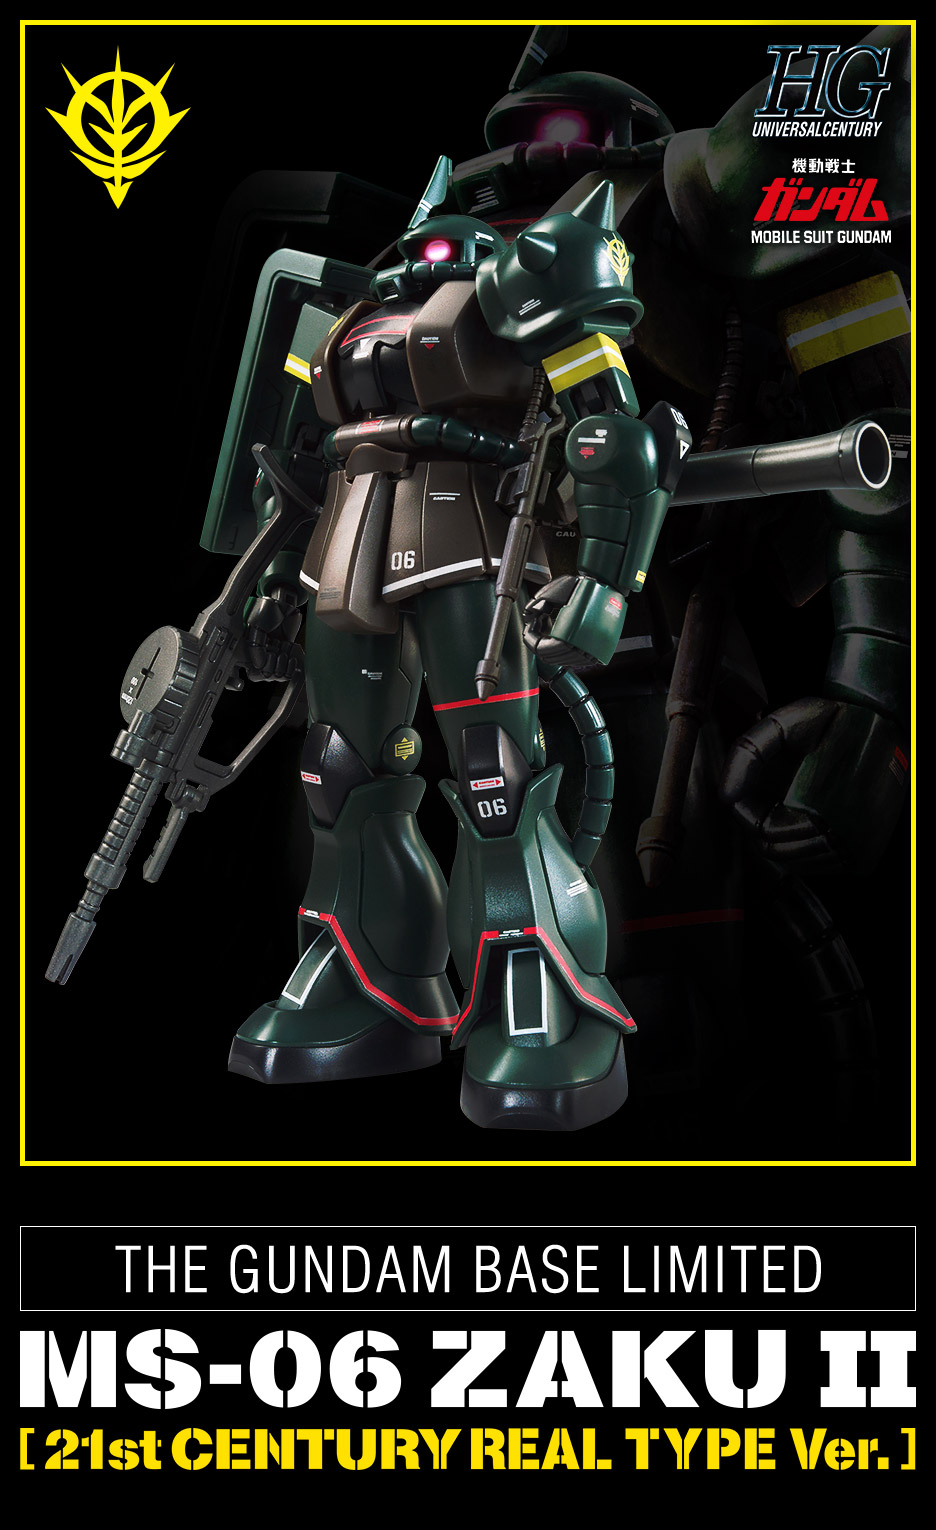 Hg 1 144 ガンダムベース限定 ザクii 21stcentury Real Type Ver 商品情報 The Gundam Base ガンダムベース公式サイト